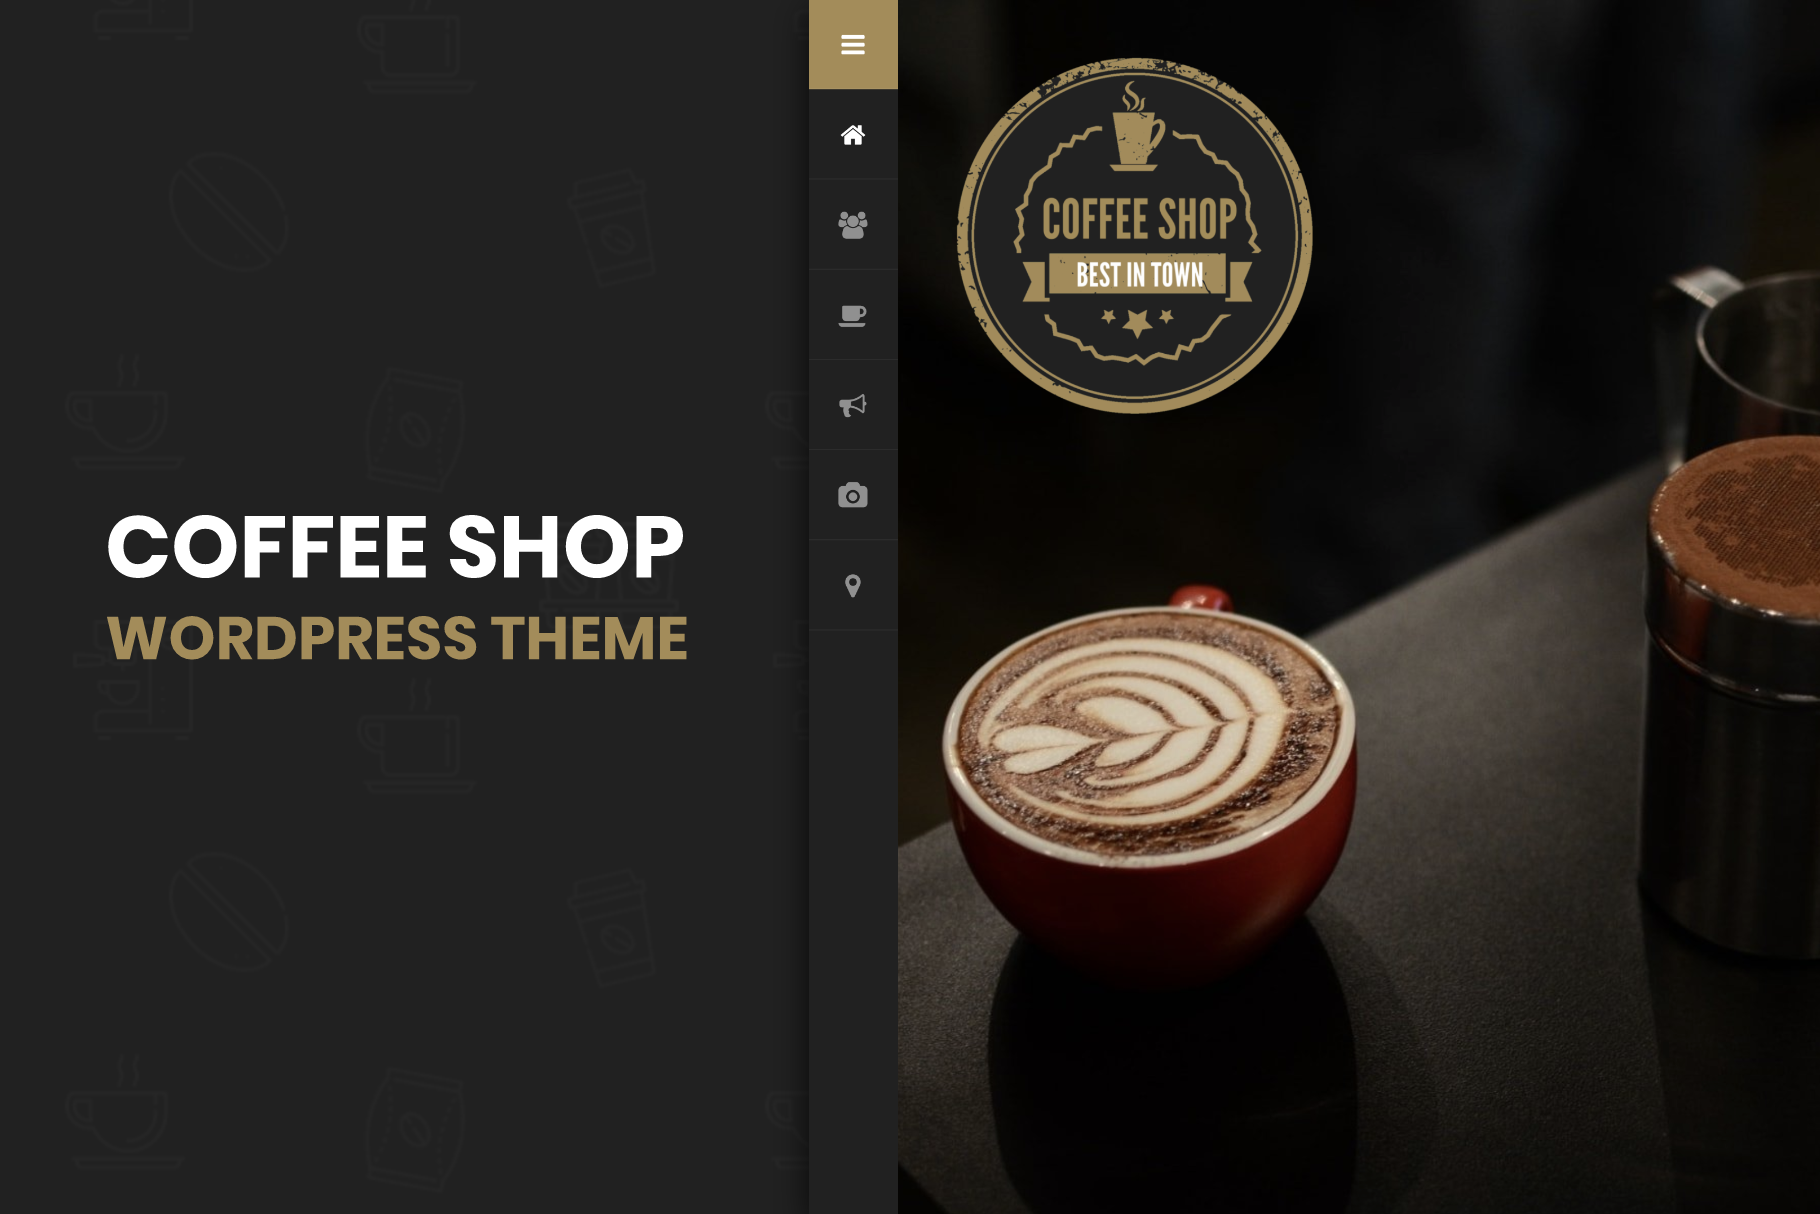 Coffee shop WordPress theme